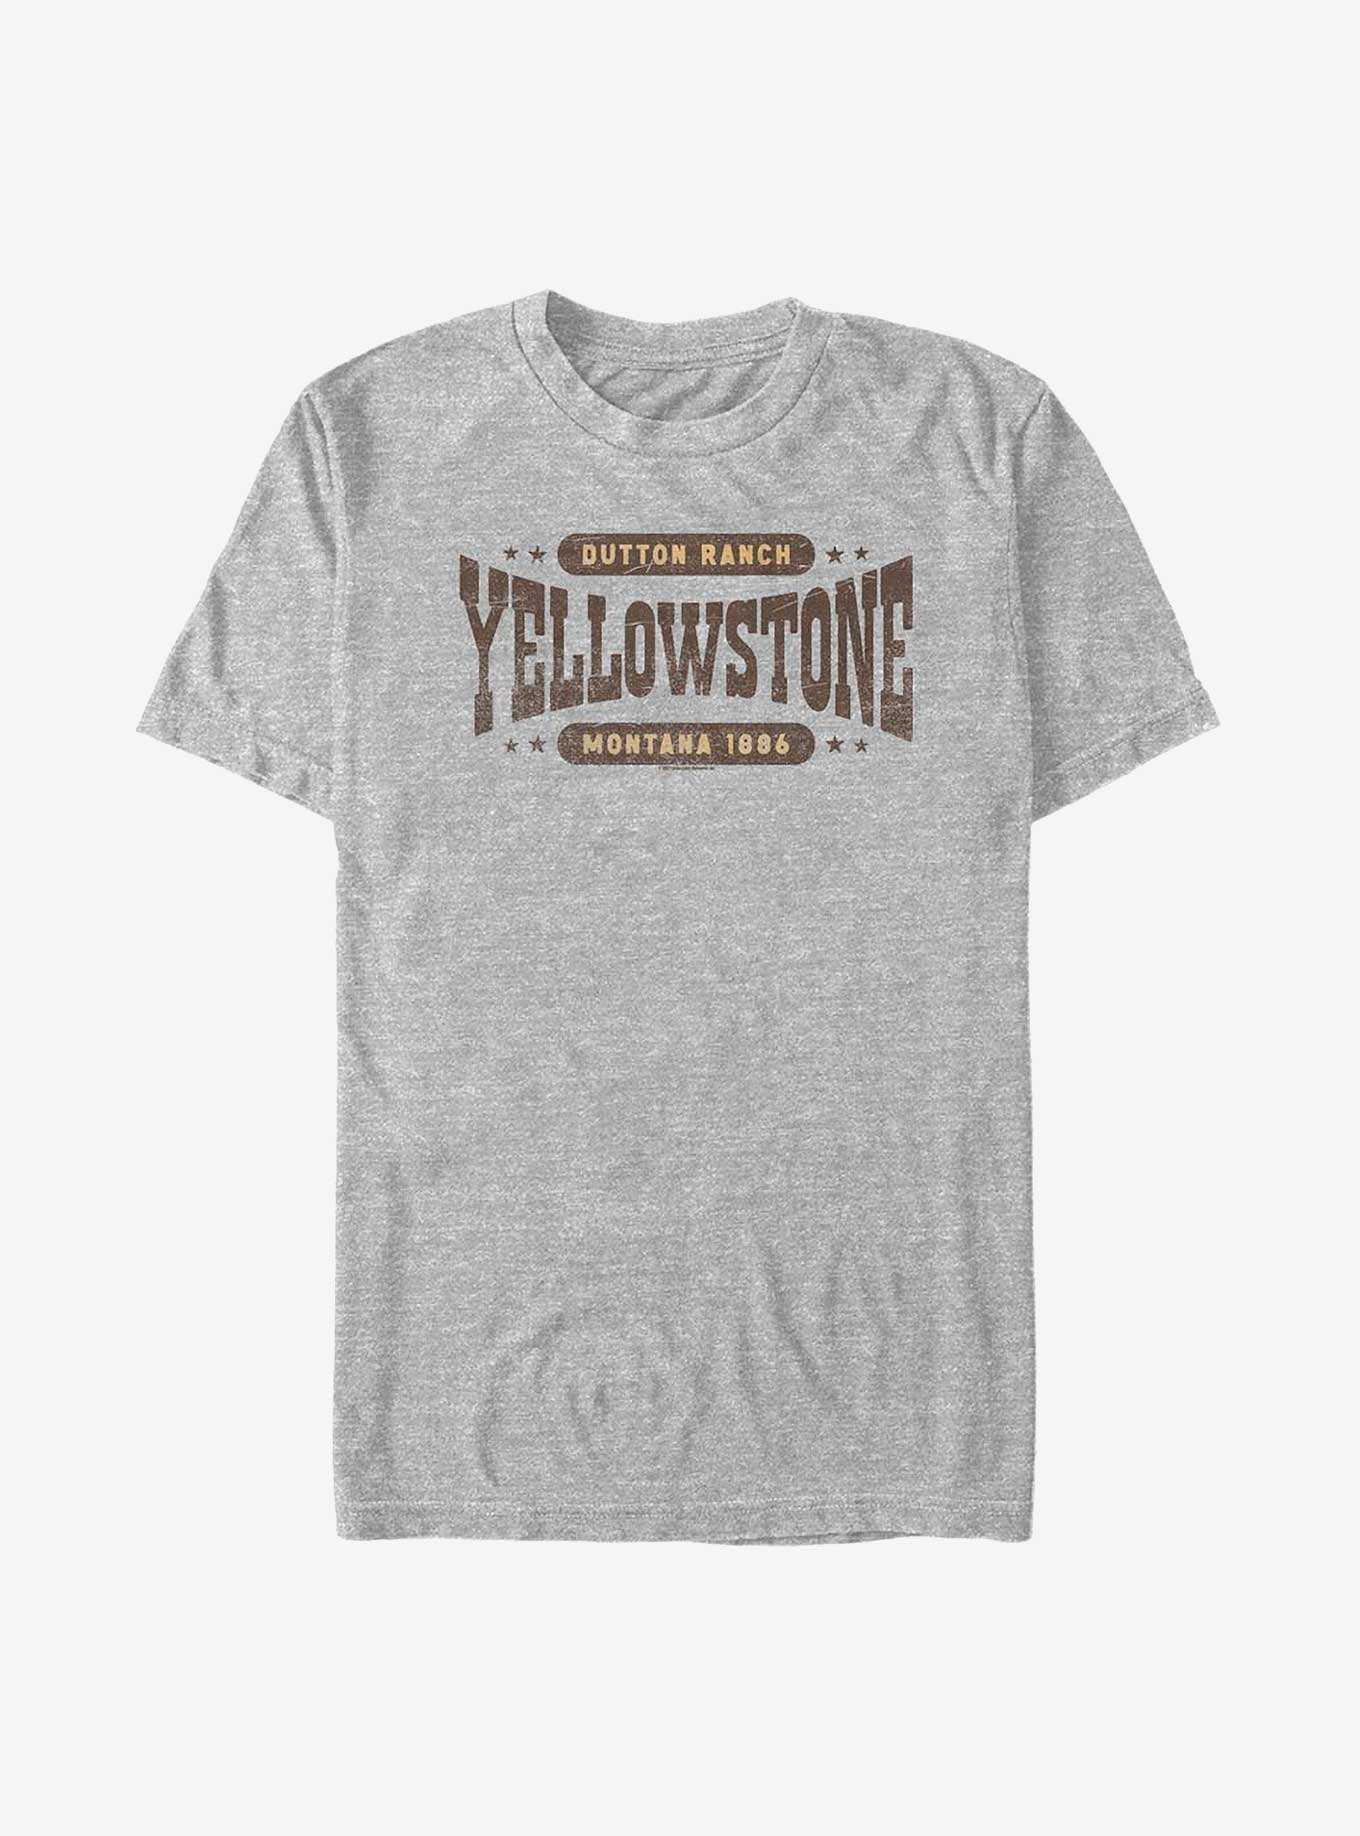 Yellowstone Dutton Ranch Montana T-Shirt, , hi-res